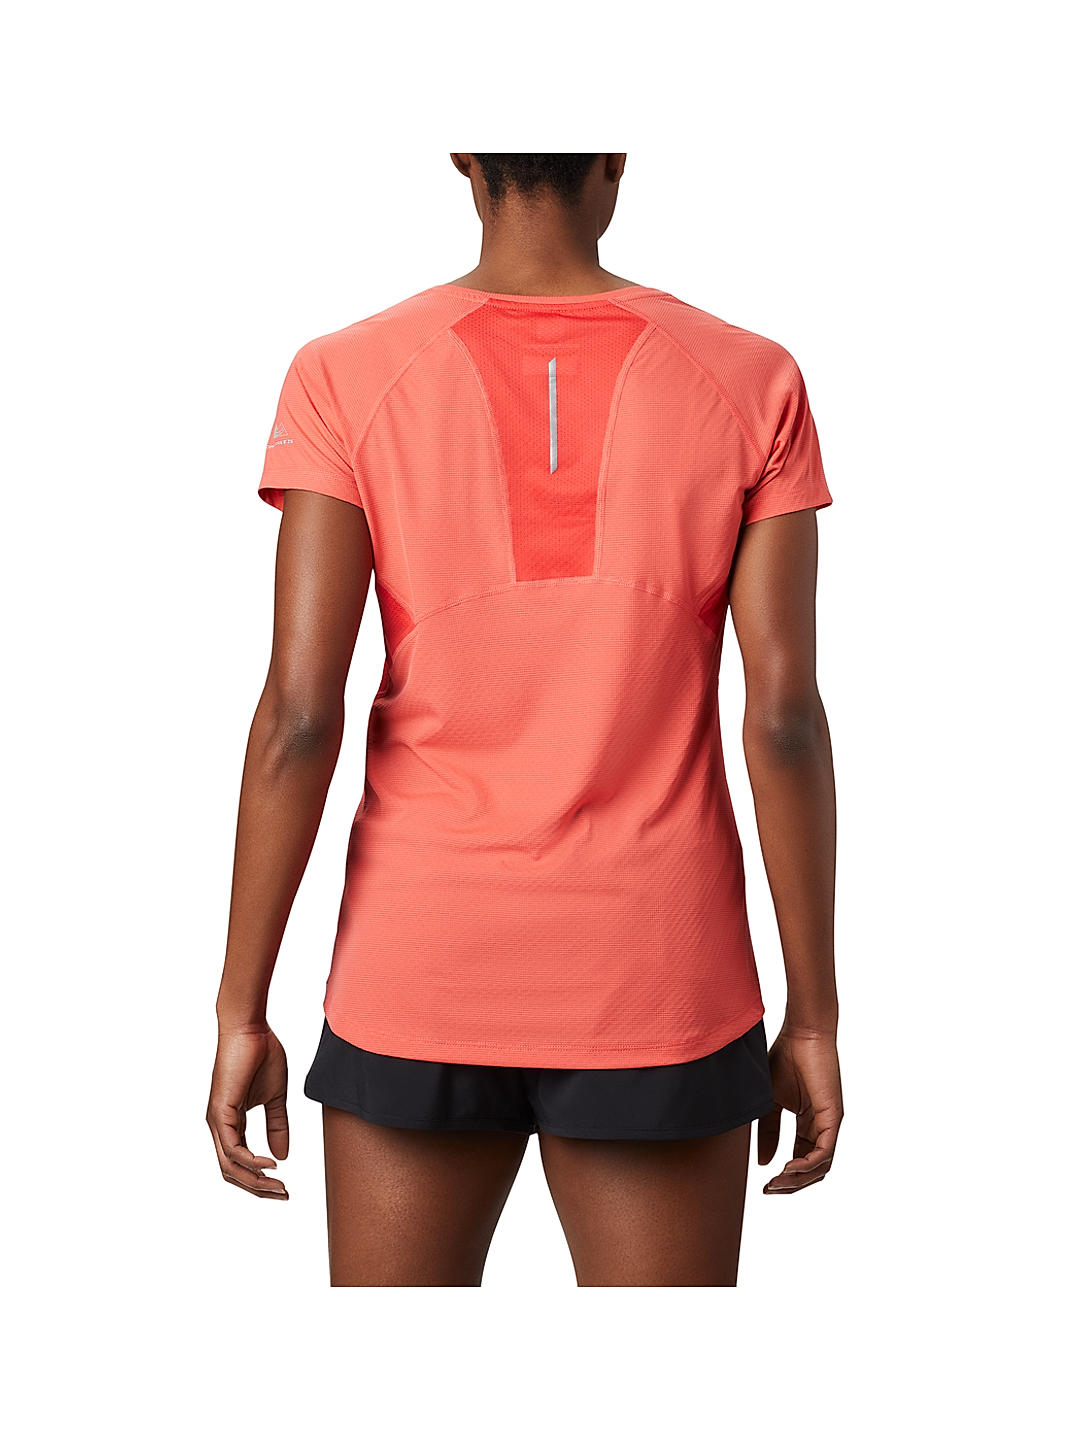 Titan ultra short sleeve shirt, Columbia